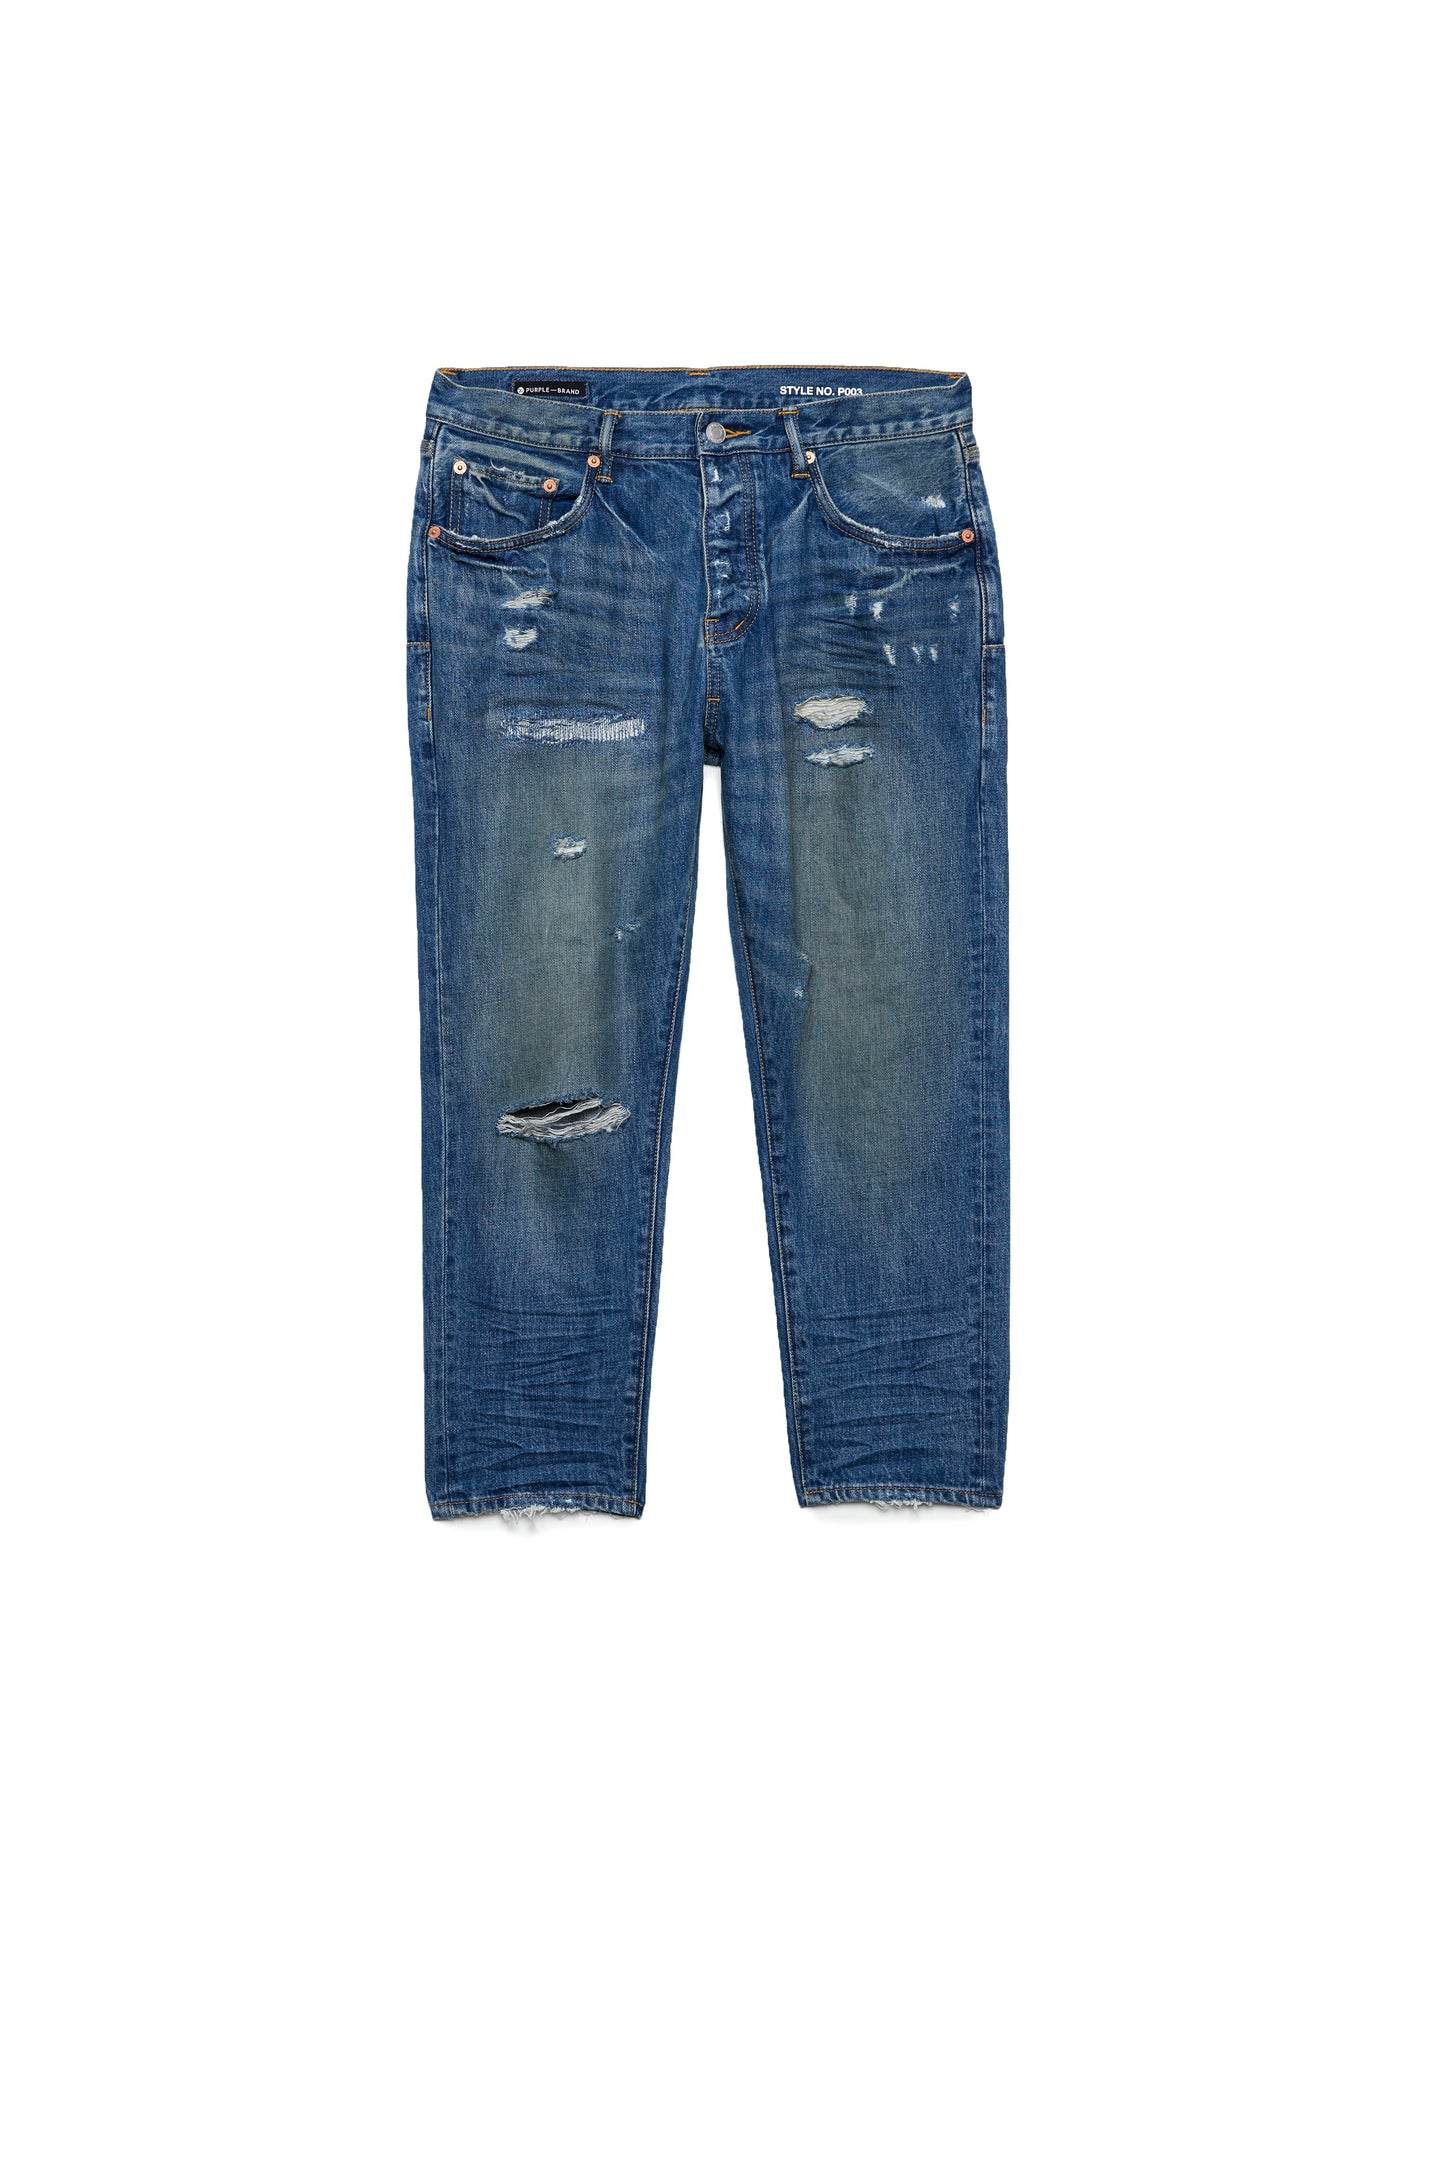 PURPLE BRAND - Men's Denim Jean - Long Rise Relaxed - Style No. P003 - Indigo Vintage Distress Crop - Front